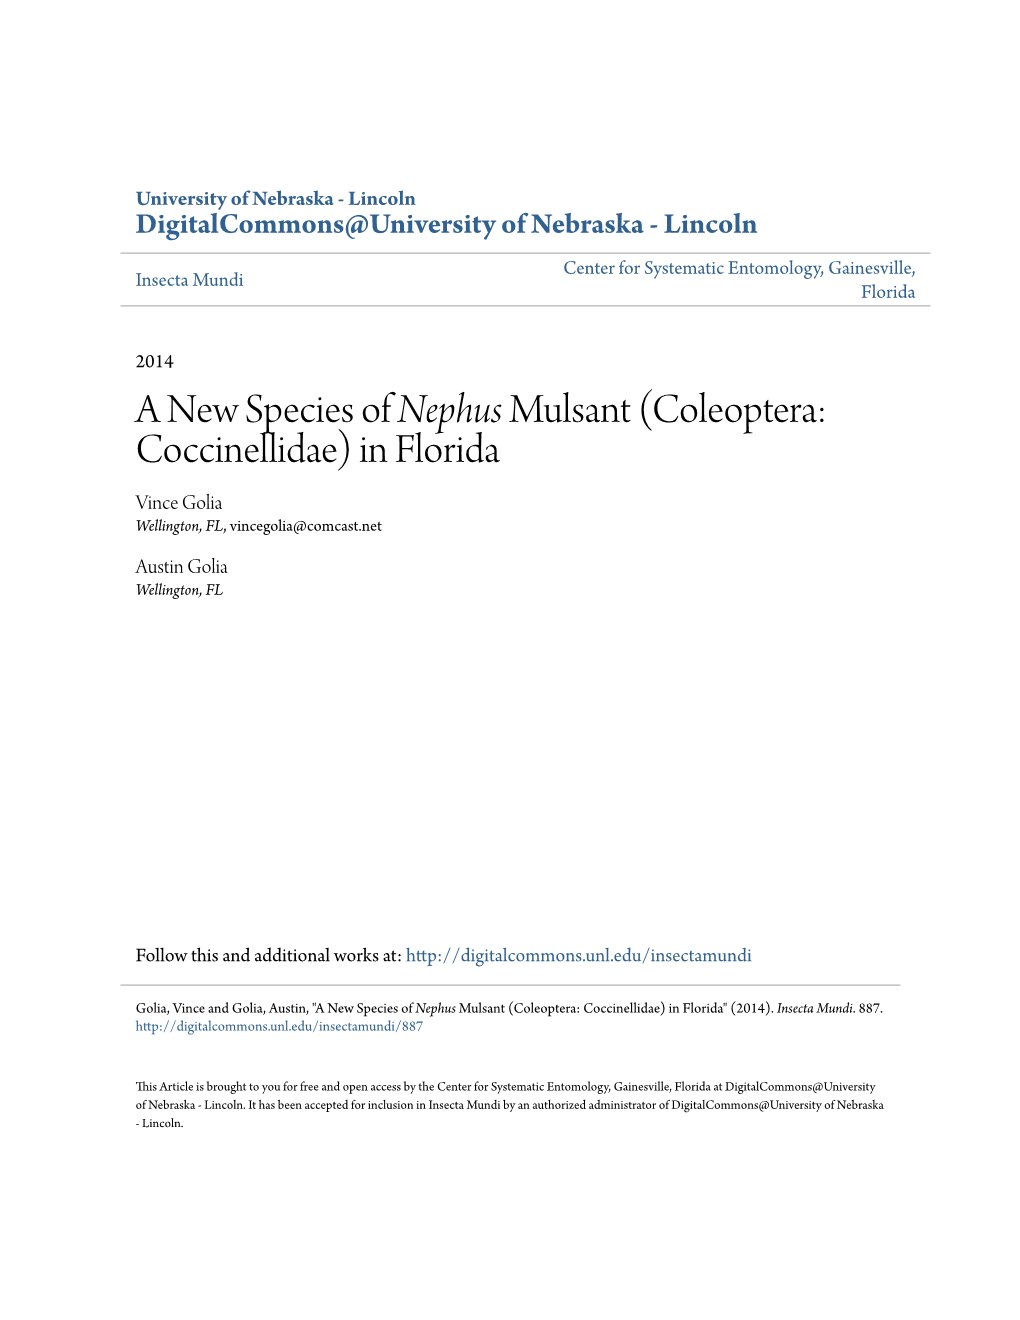 A New Species of Nephus Mulsant (Coleoptera: Coccinellidae) in Florida Vince Golia Wellington, FL, Vincegolia@Comcast.Net